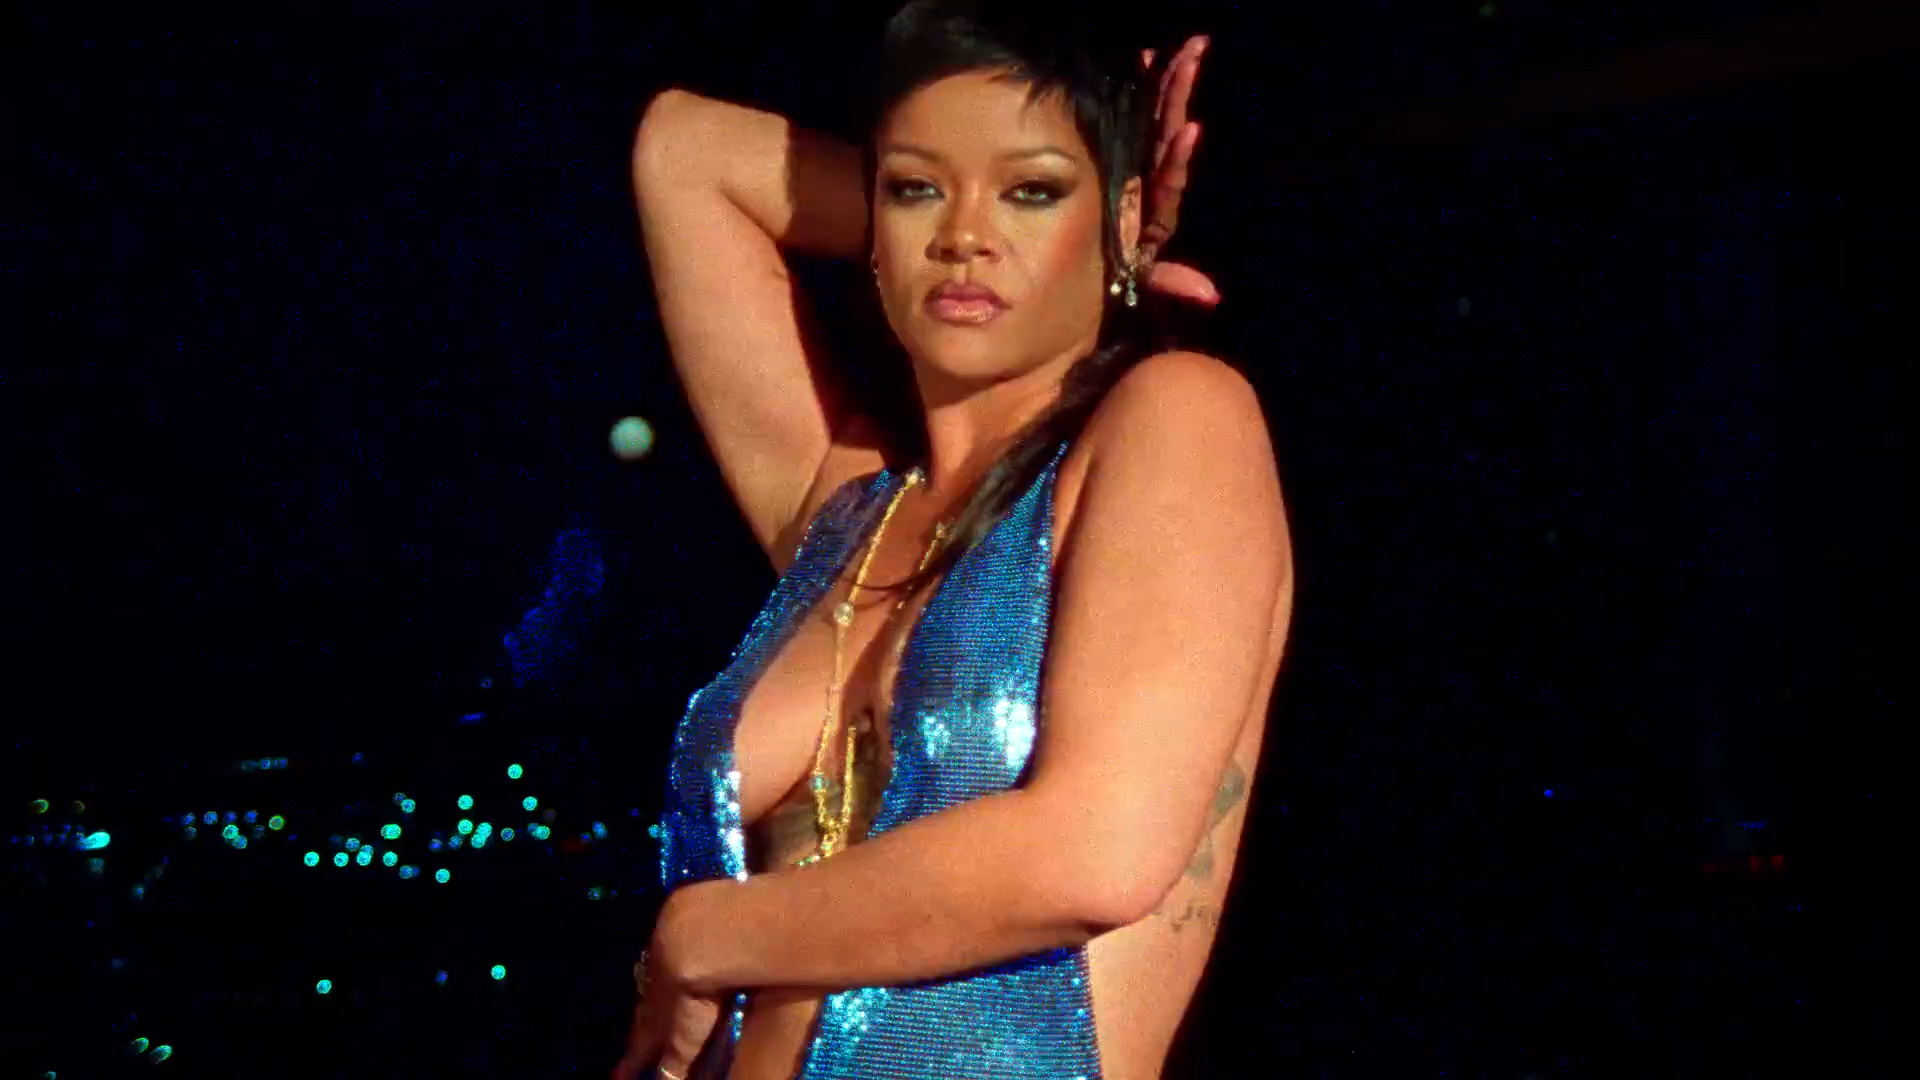 Fotos n°25 : Rihanna es Thottin en The Gram!